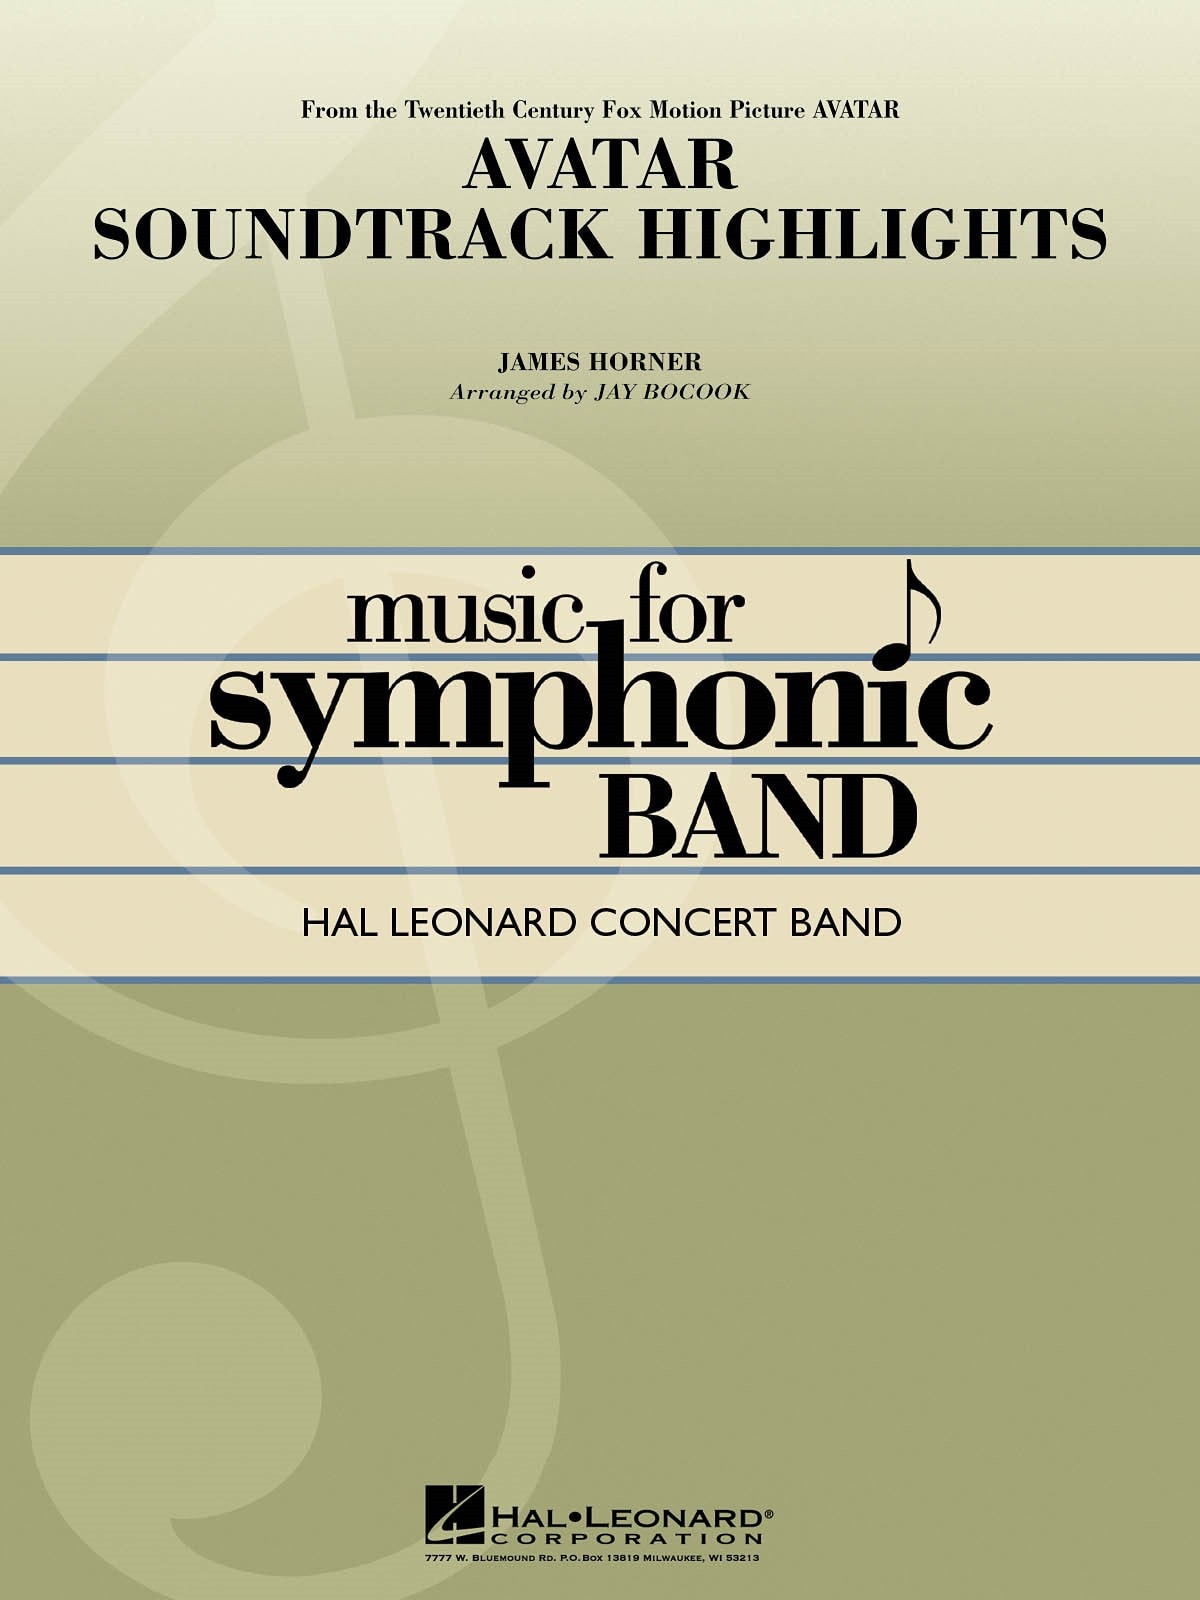 Avatar Soundtrack Highlights for Concert Band/Harmonie published by Hal Leonard - Set (Score & Parts)